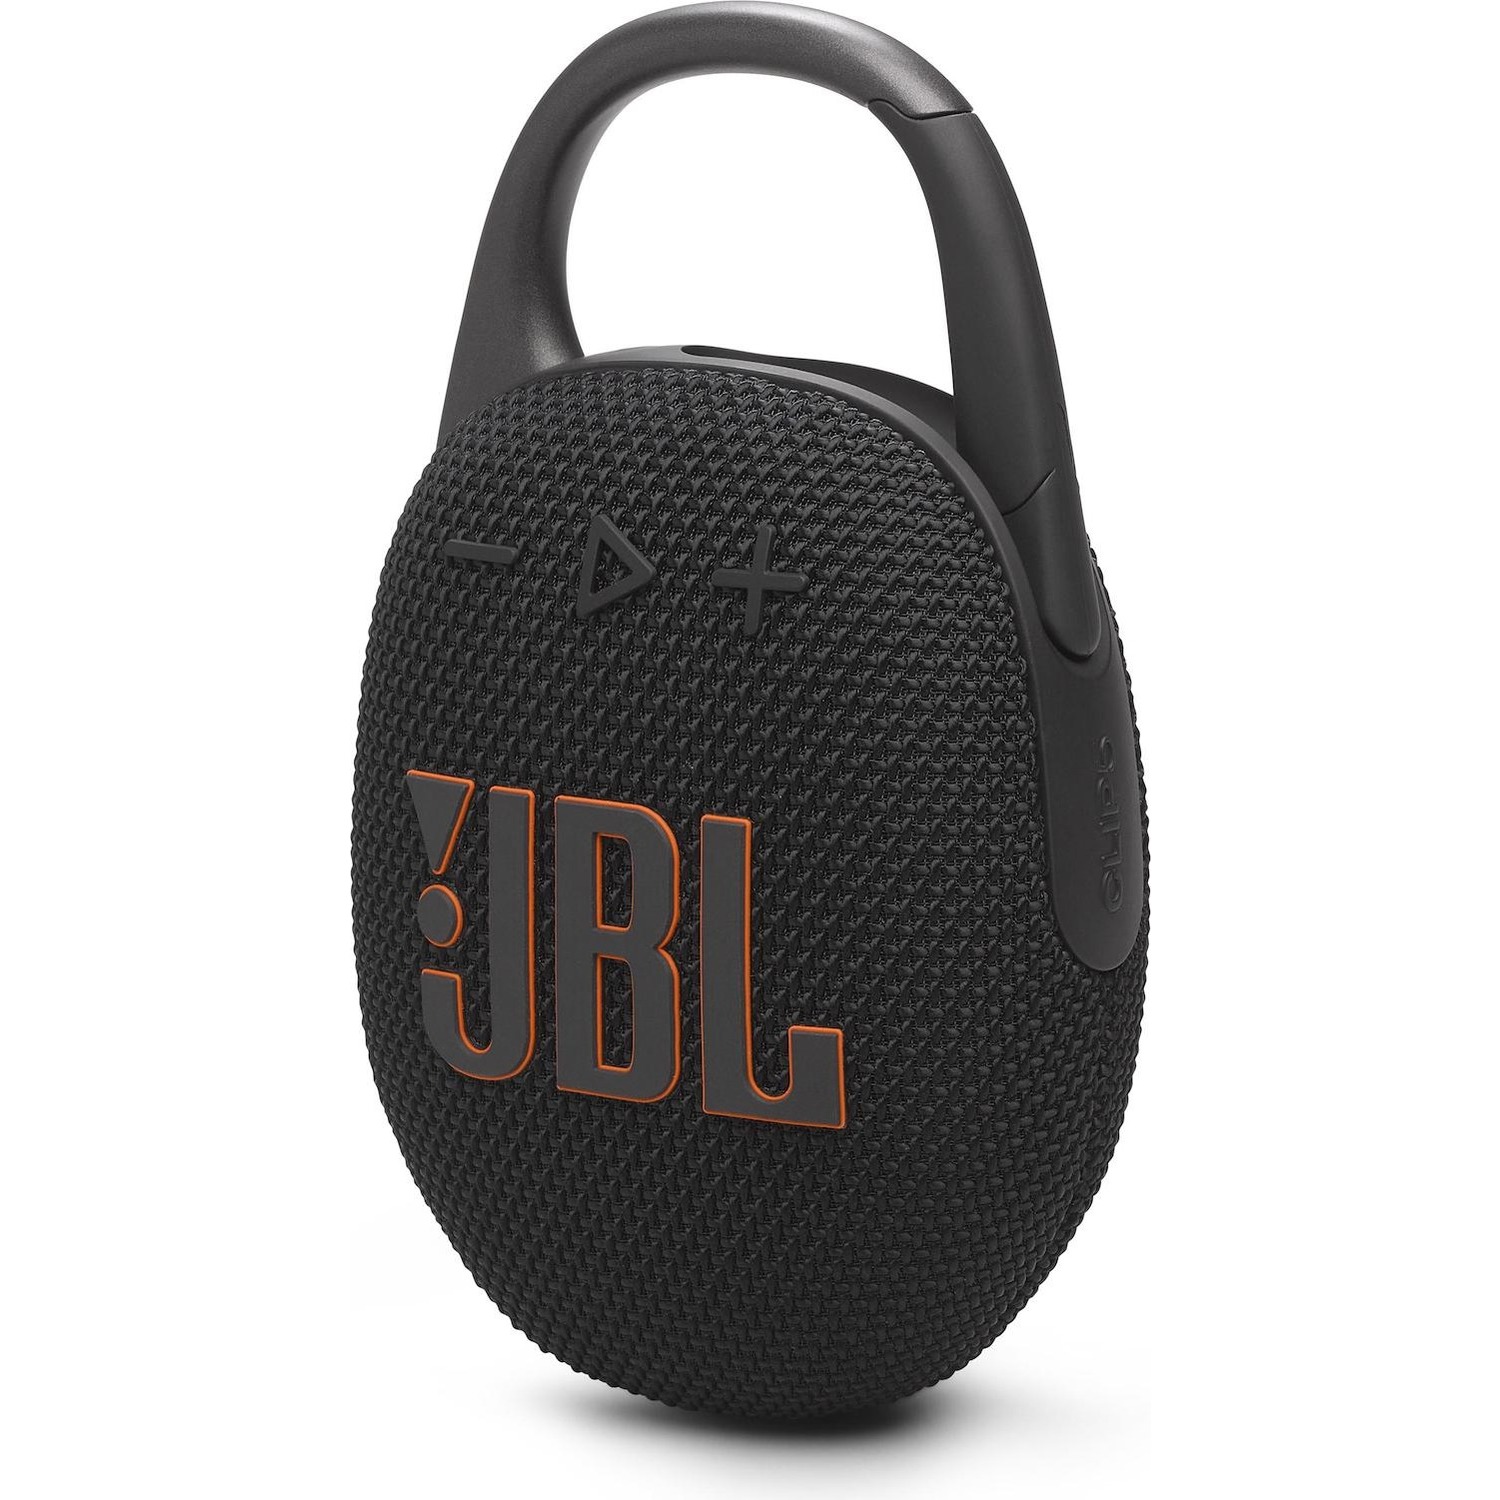 Immagine per Speaker bluetooth JBL CLIP 5 colore nero da DIMOStore